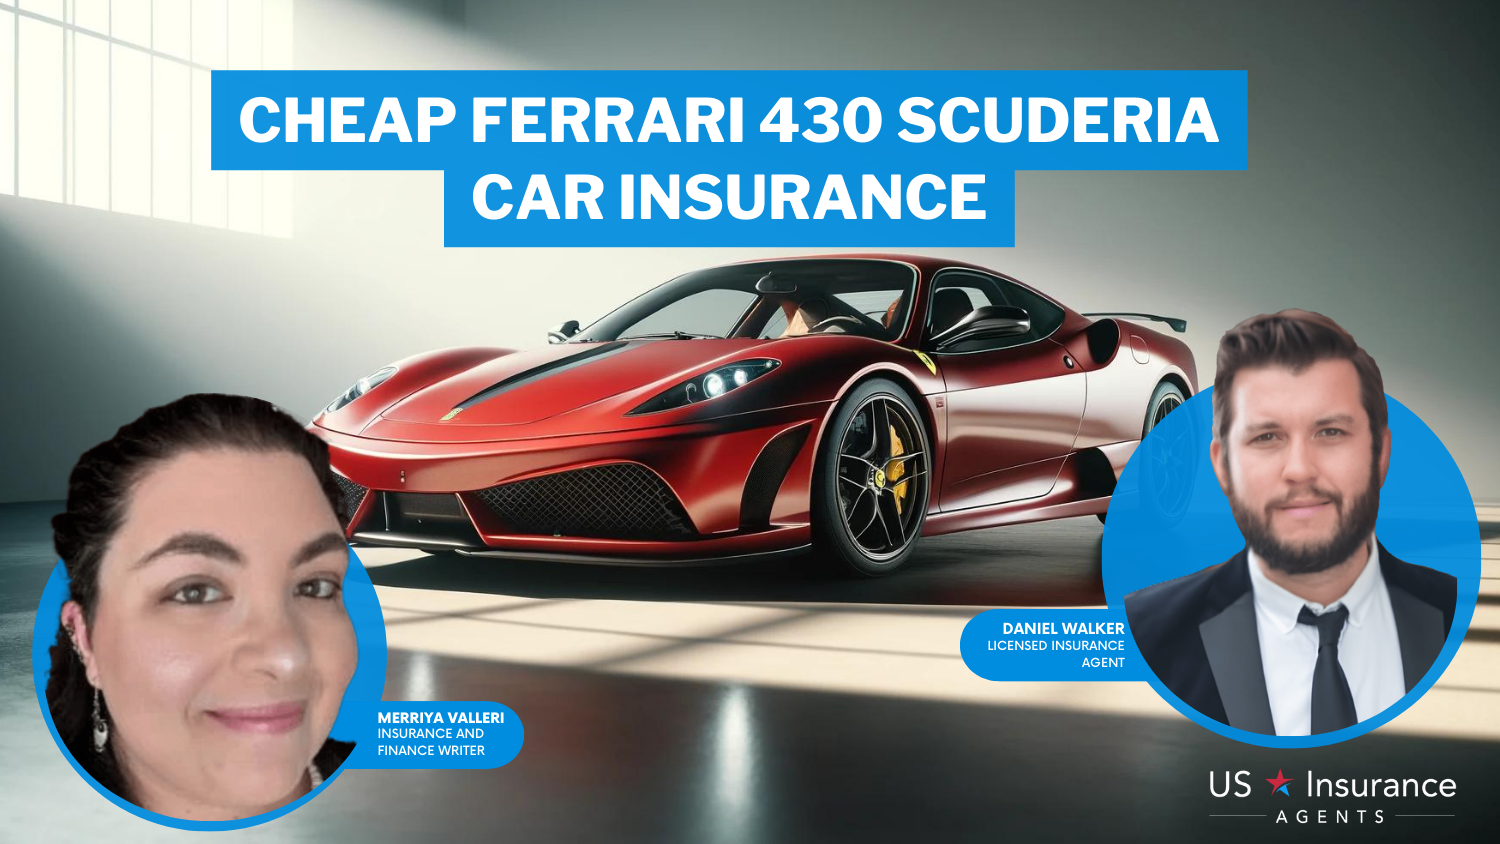 State Farm, USAA and AAA Insurance: Cheap Ferrari 430 Scuderia Car Insurance